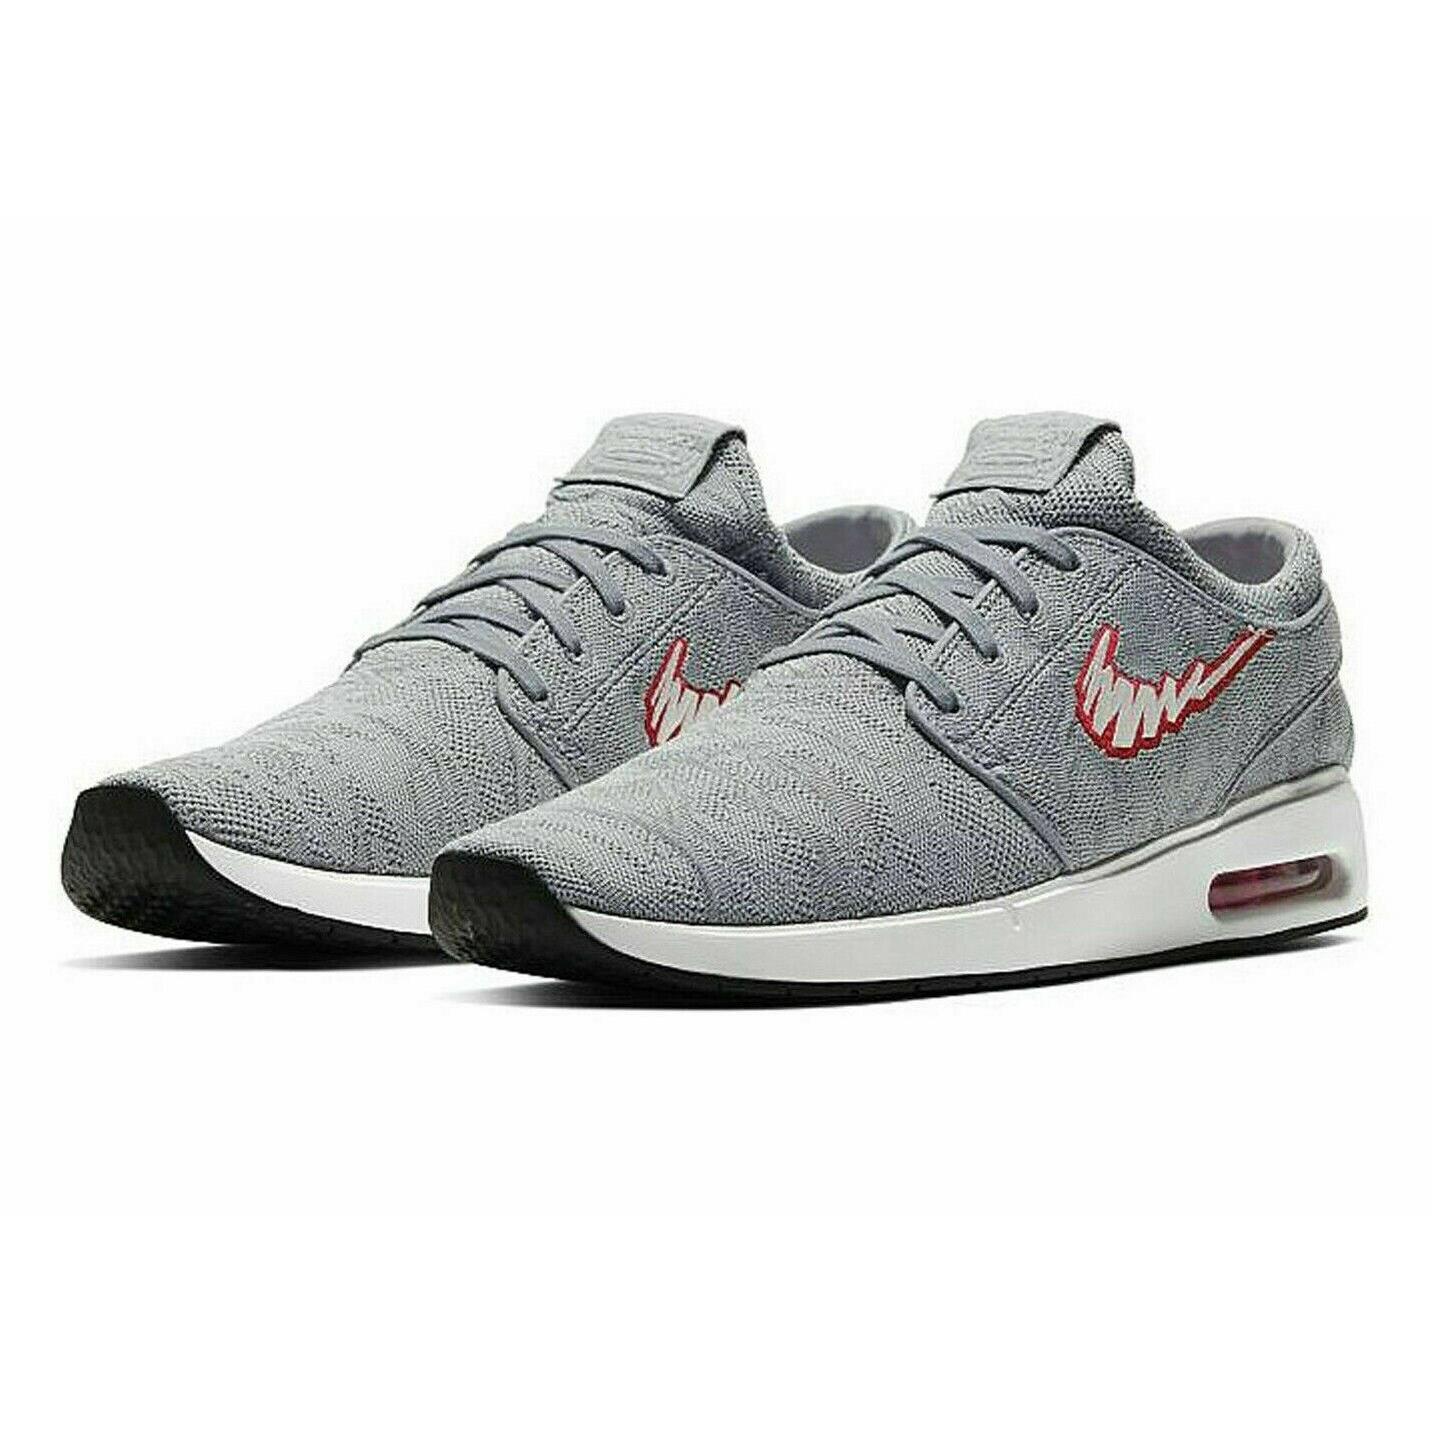 Nike SB Air Max Janoski 2 Mens Size 7 Sneaker Shoes AQ7477 008 Particle Grey